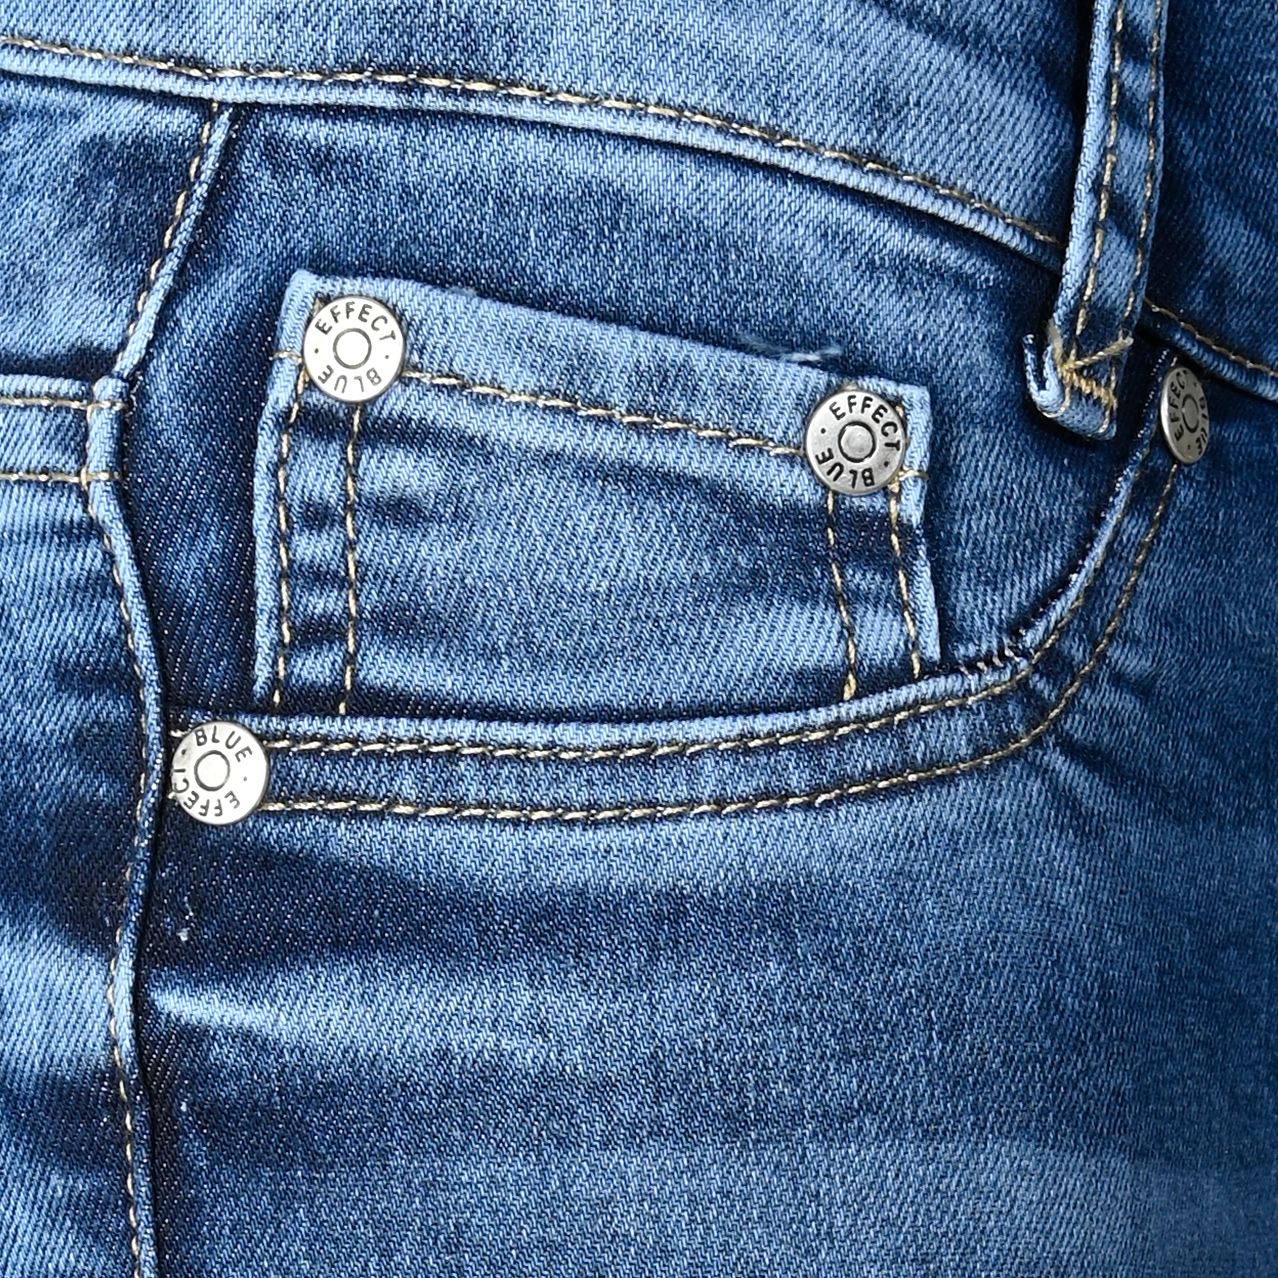 1184-Girls High-Waist Jeans Cropped, Ultrastretch, verfügbar in Slim,Normal